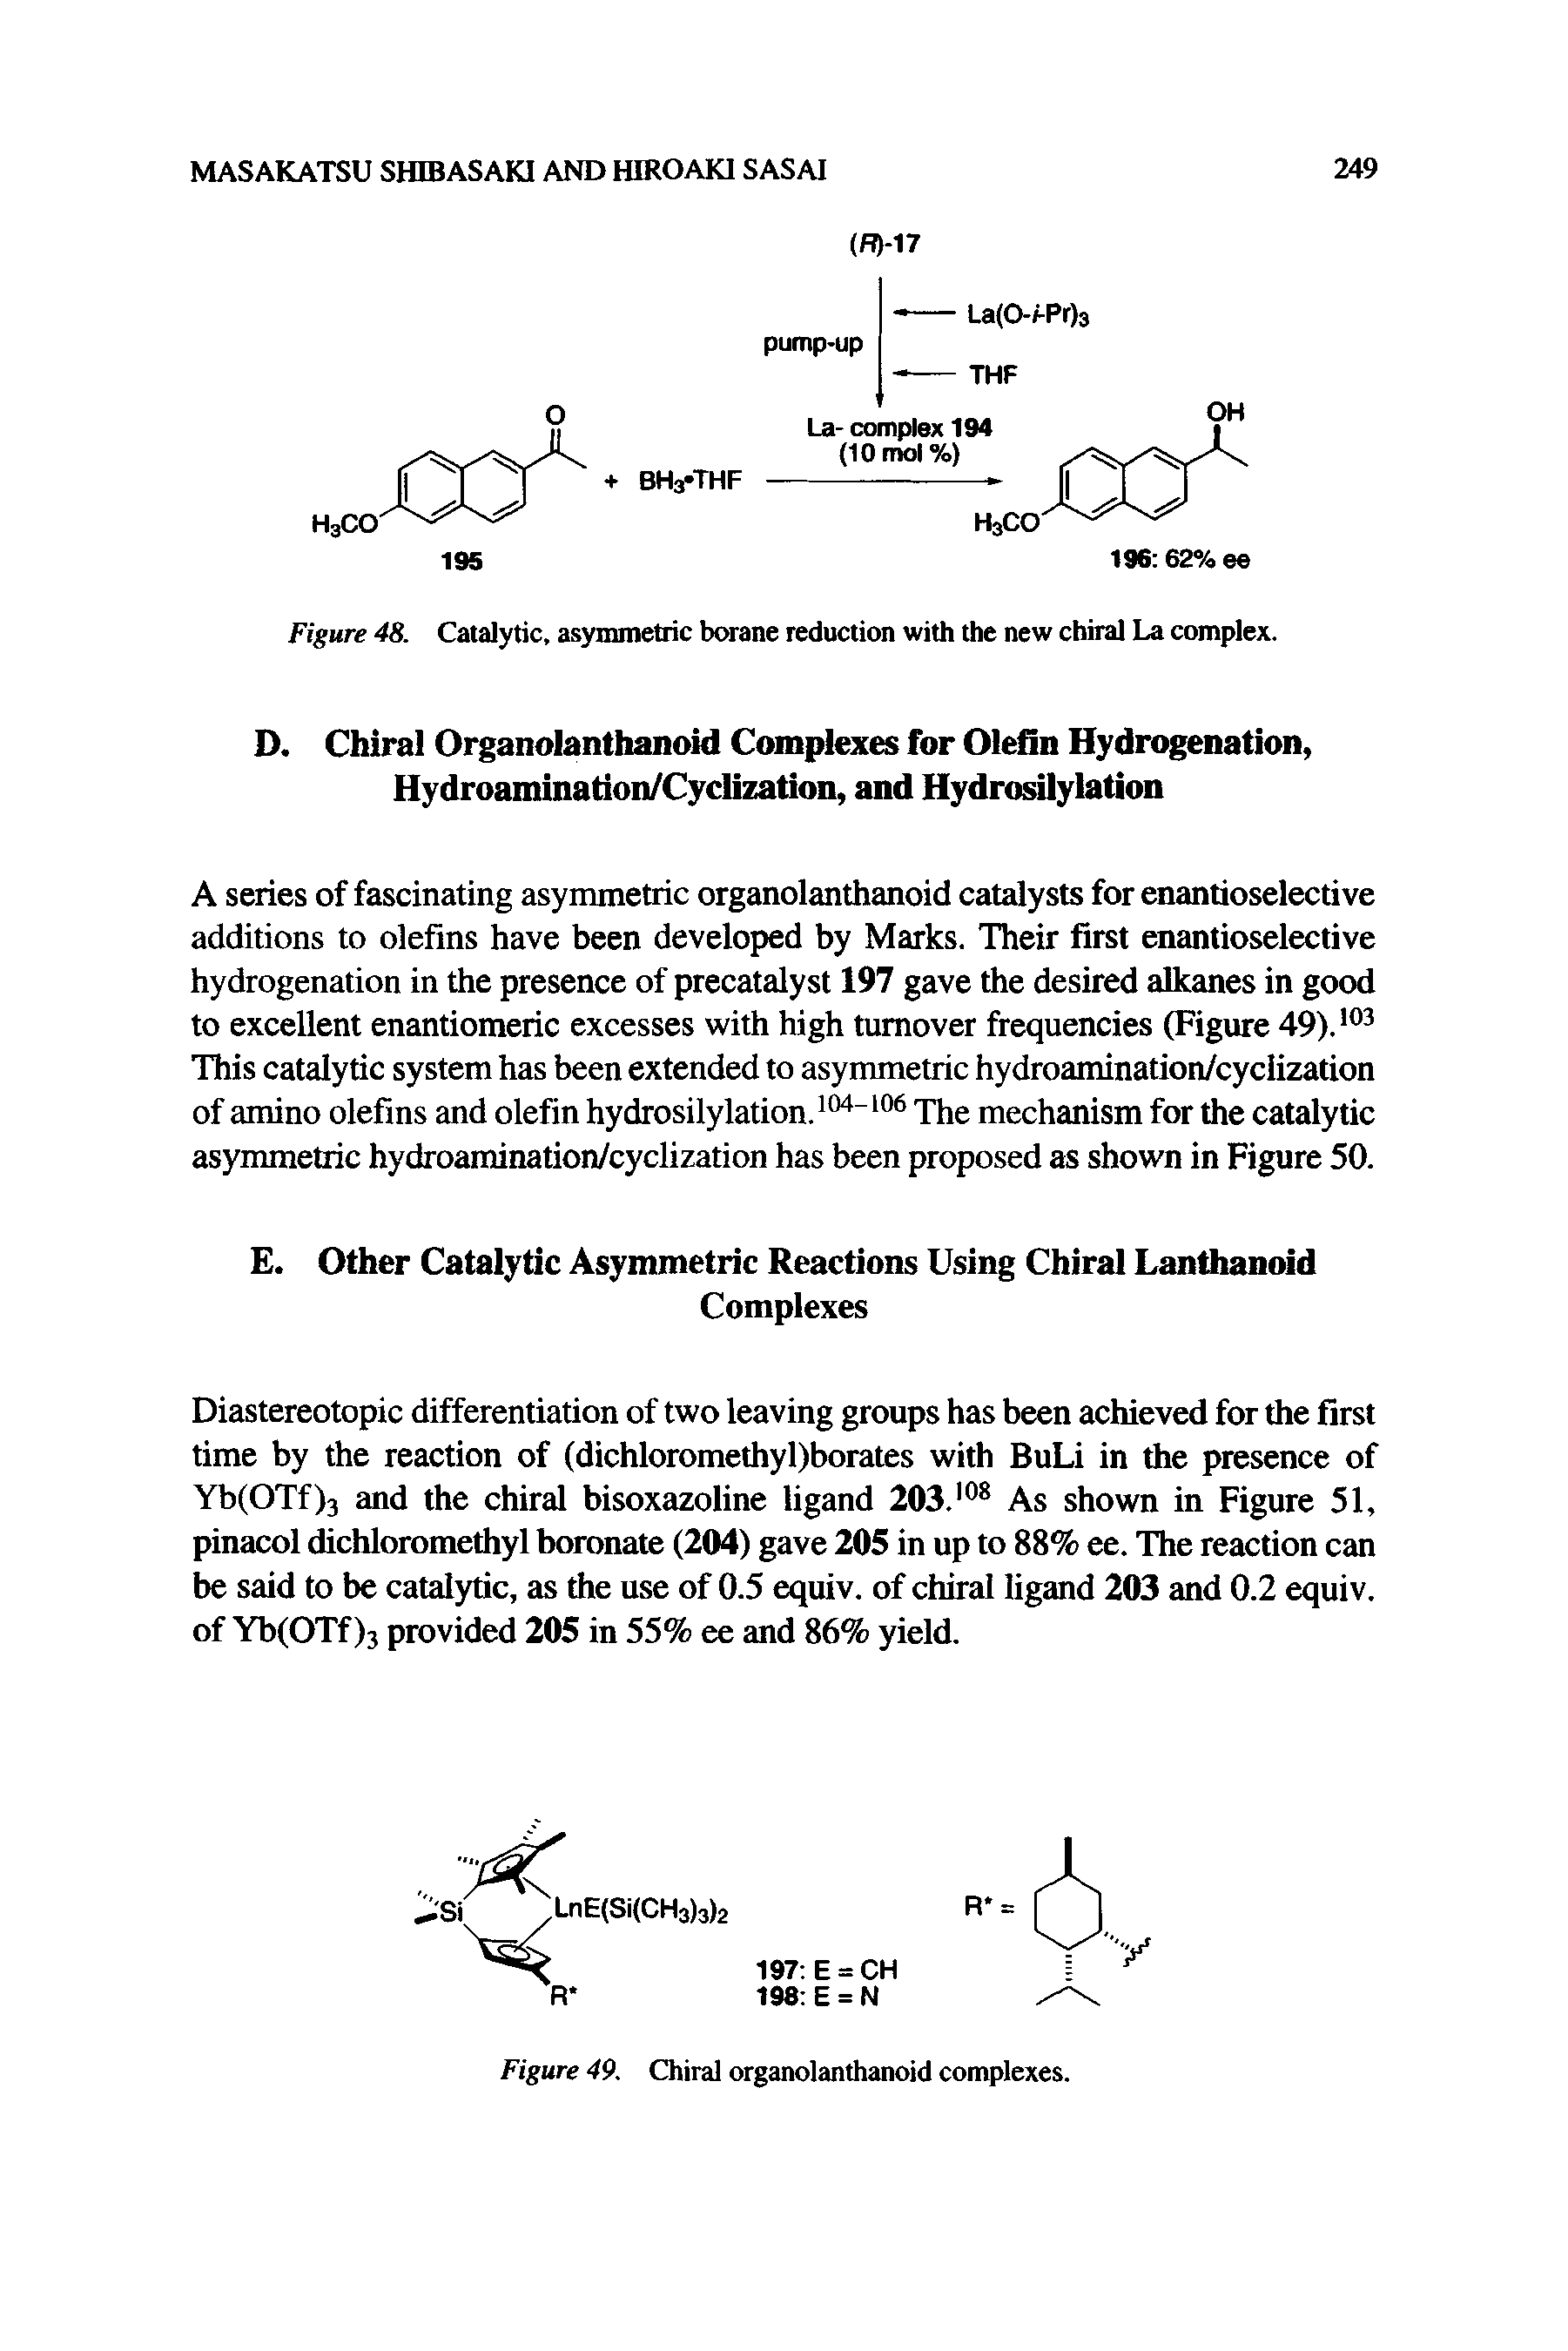 Figure 48. Catalytic, asymmetric borane reduction with the new chiral La complex.